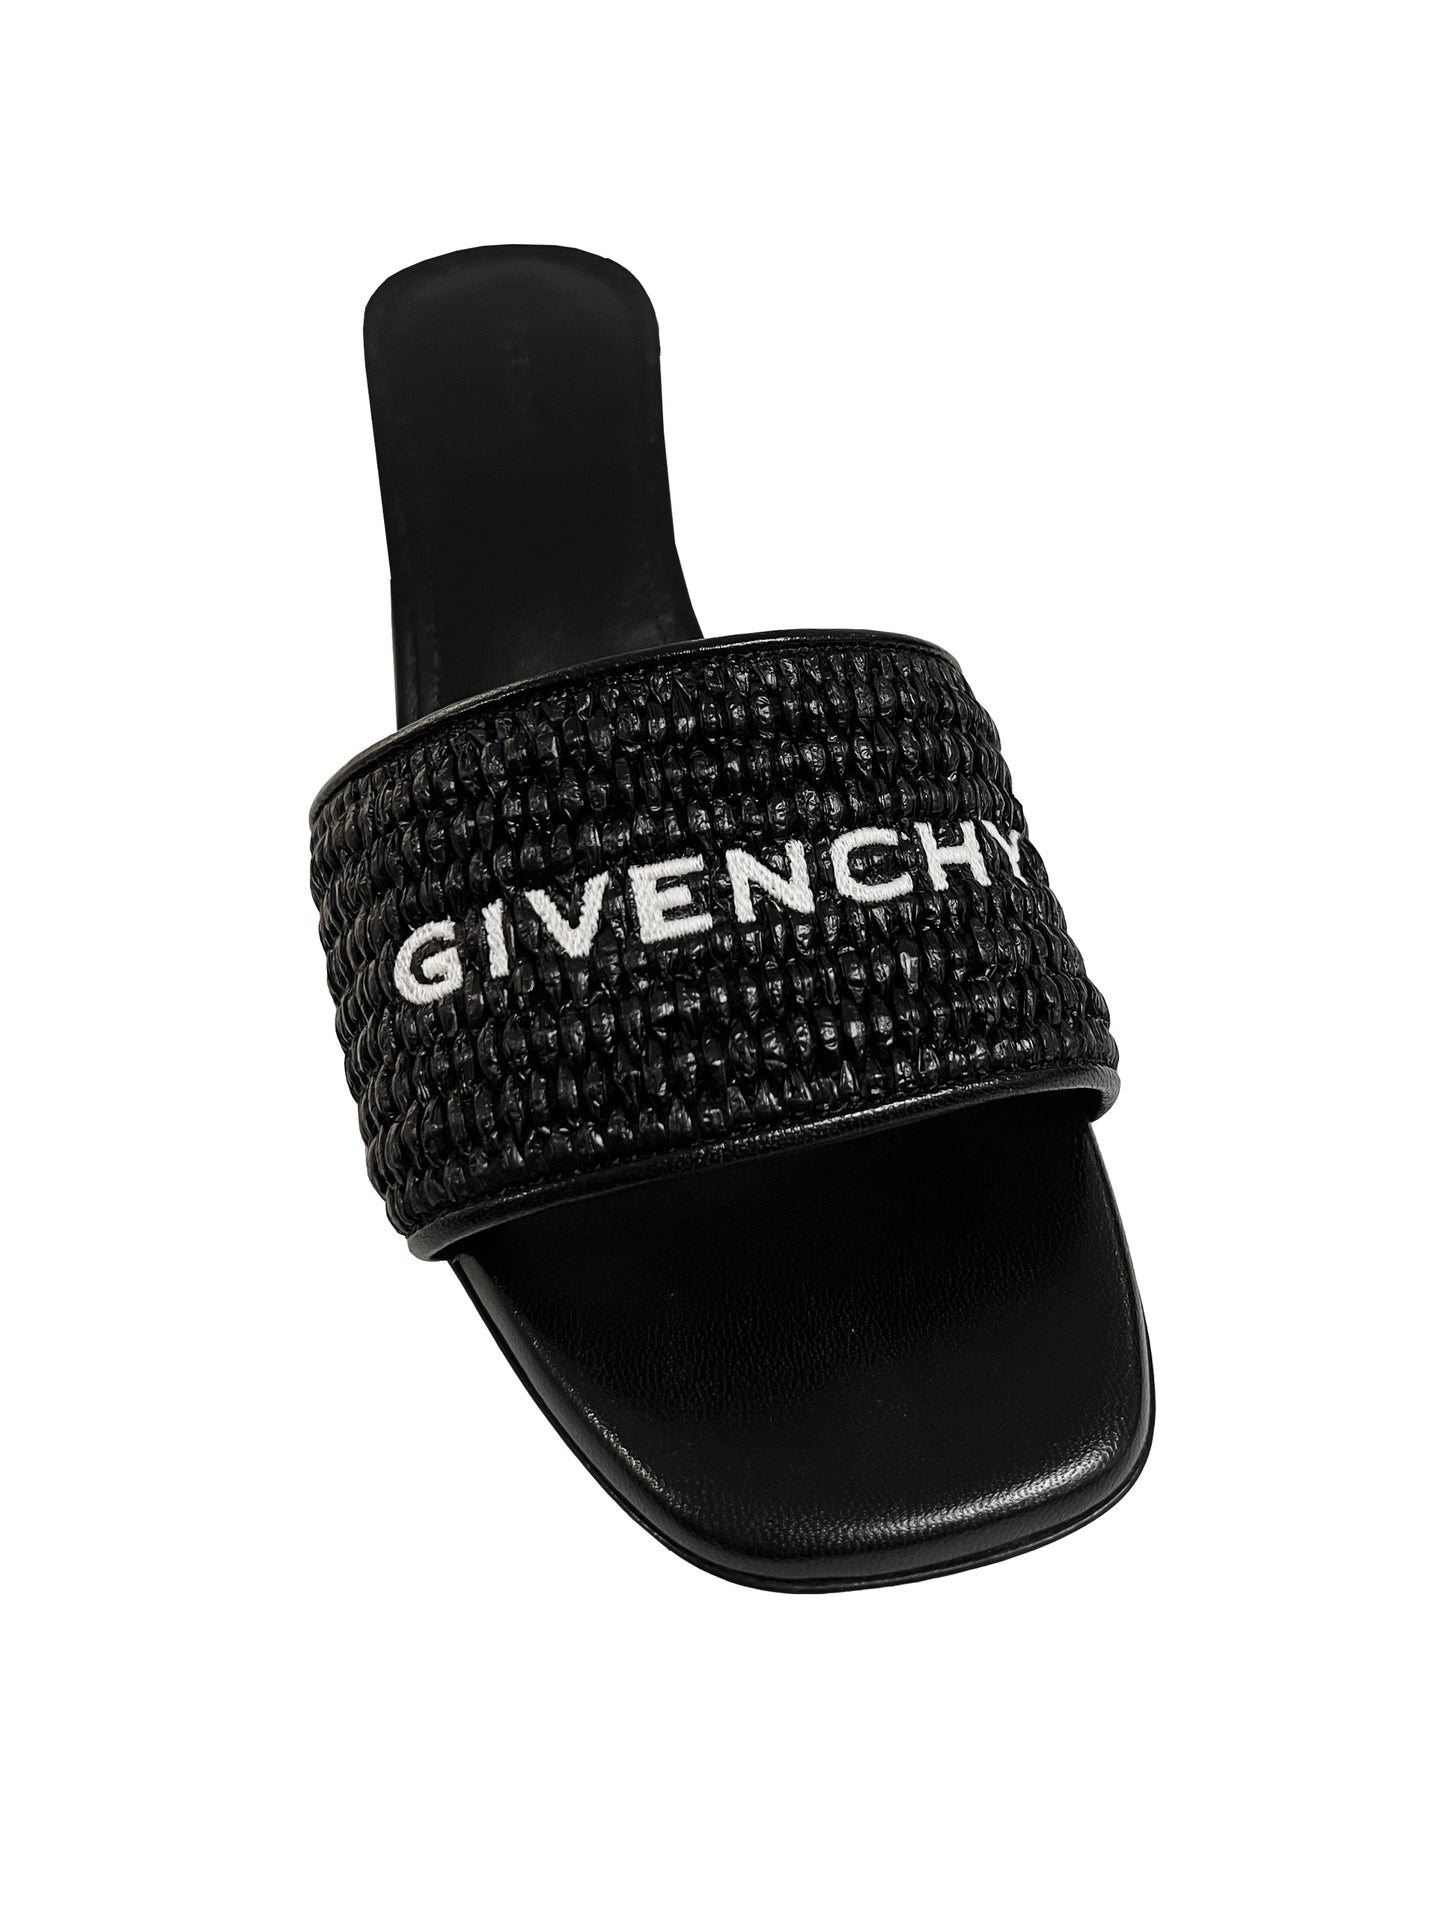 Givenchy 4G Fersen-Sandalen Schwarz/Weiss